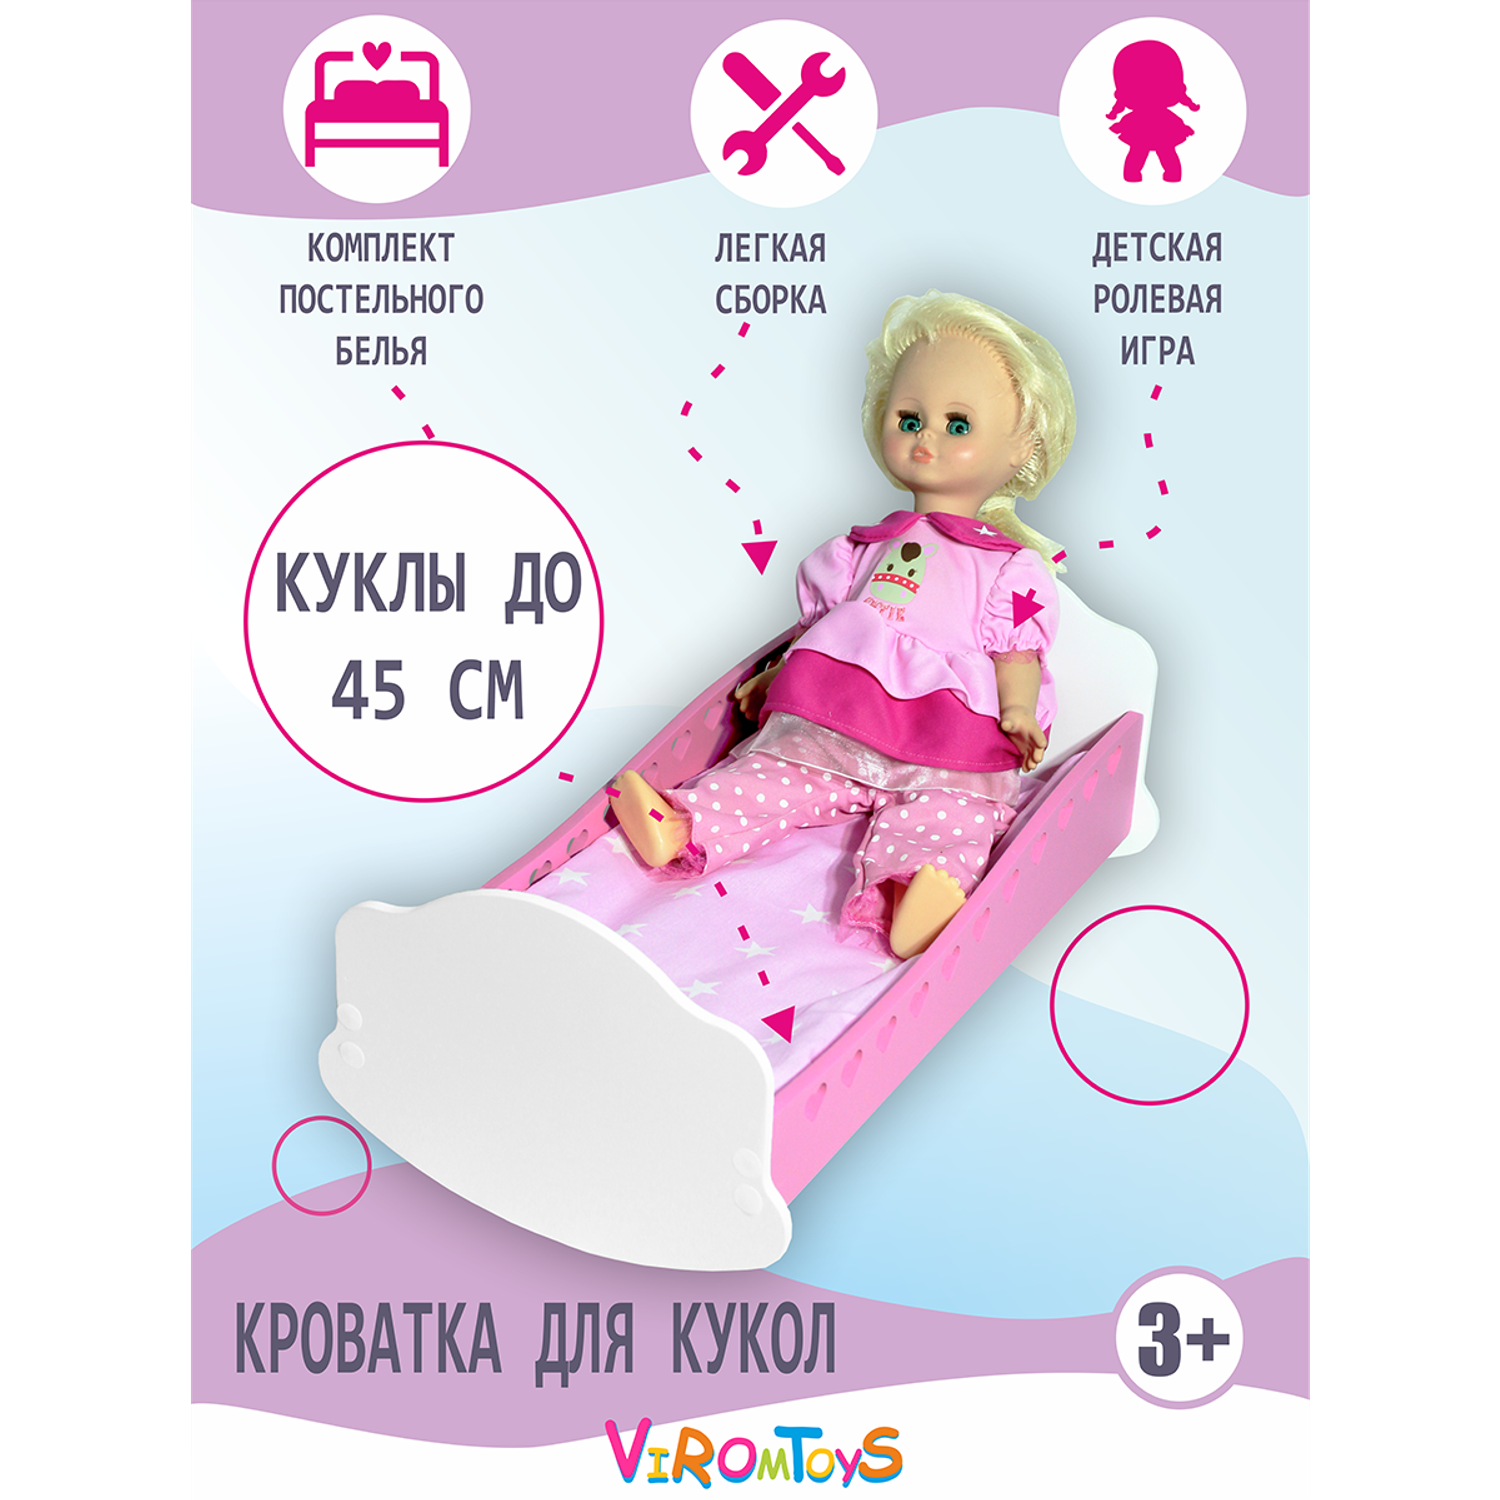 Кроватка для кукол до 45 см. ViromToys мебель Кд0017 - фото 1